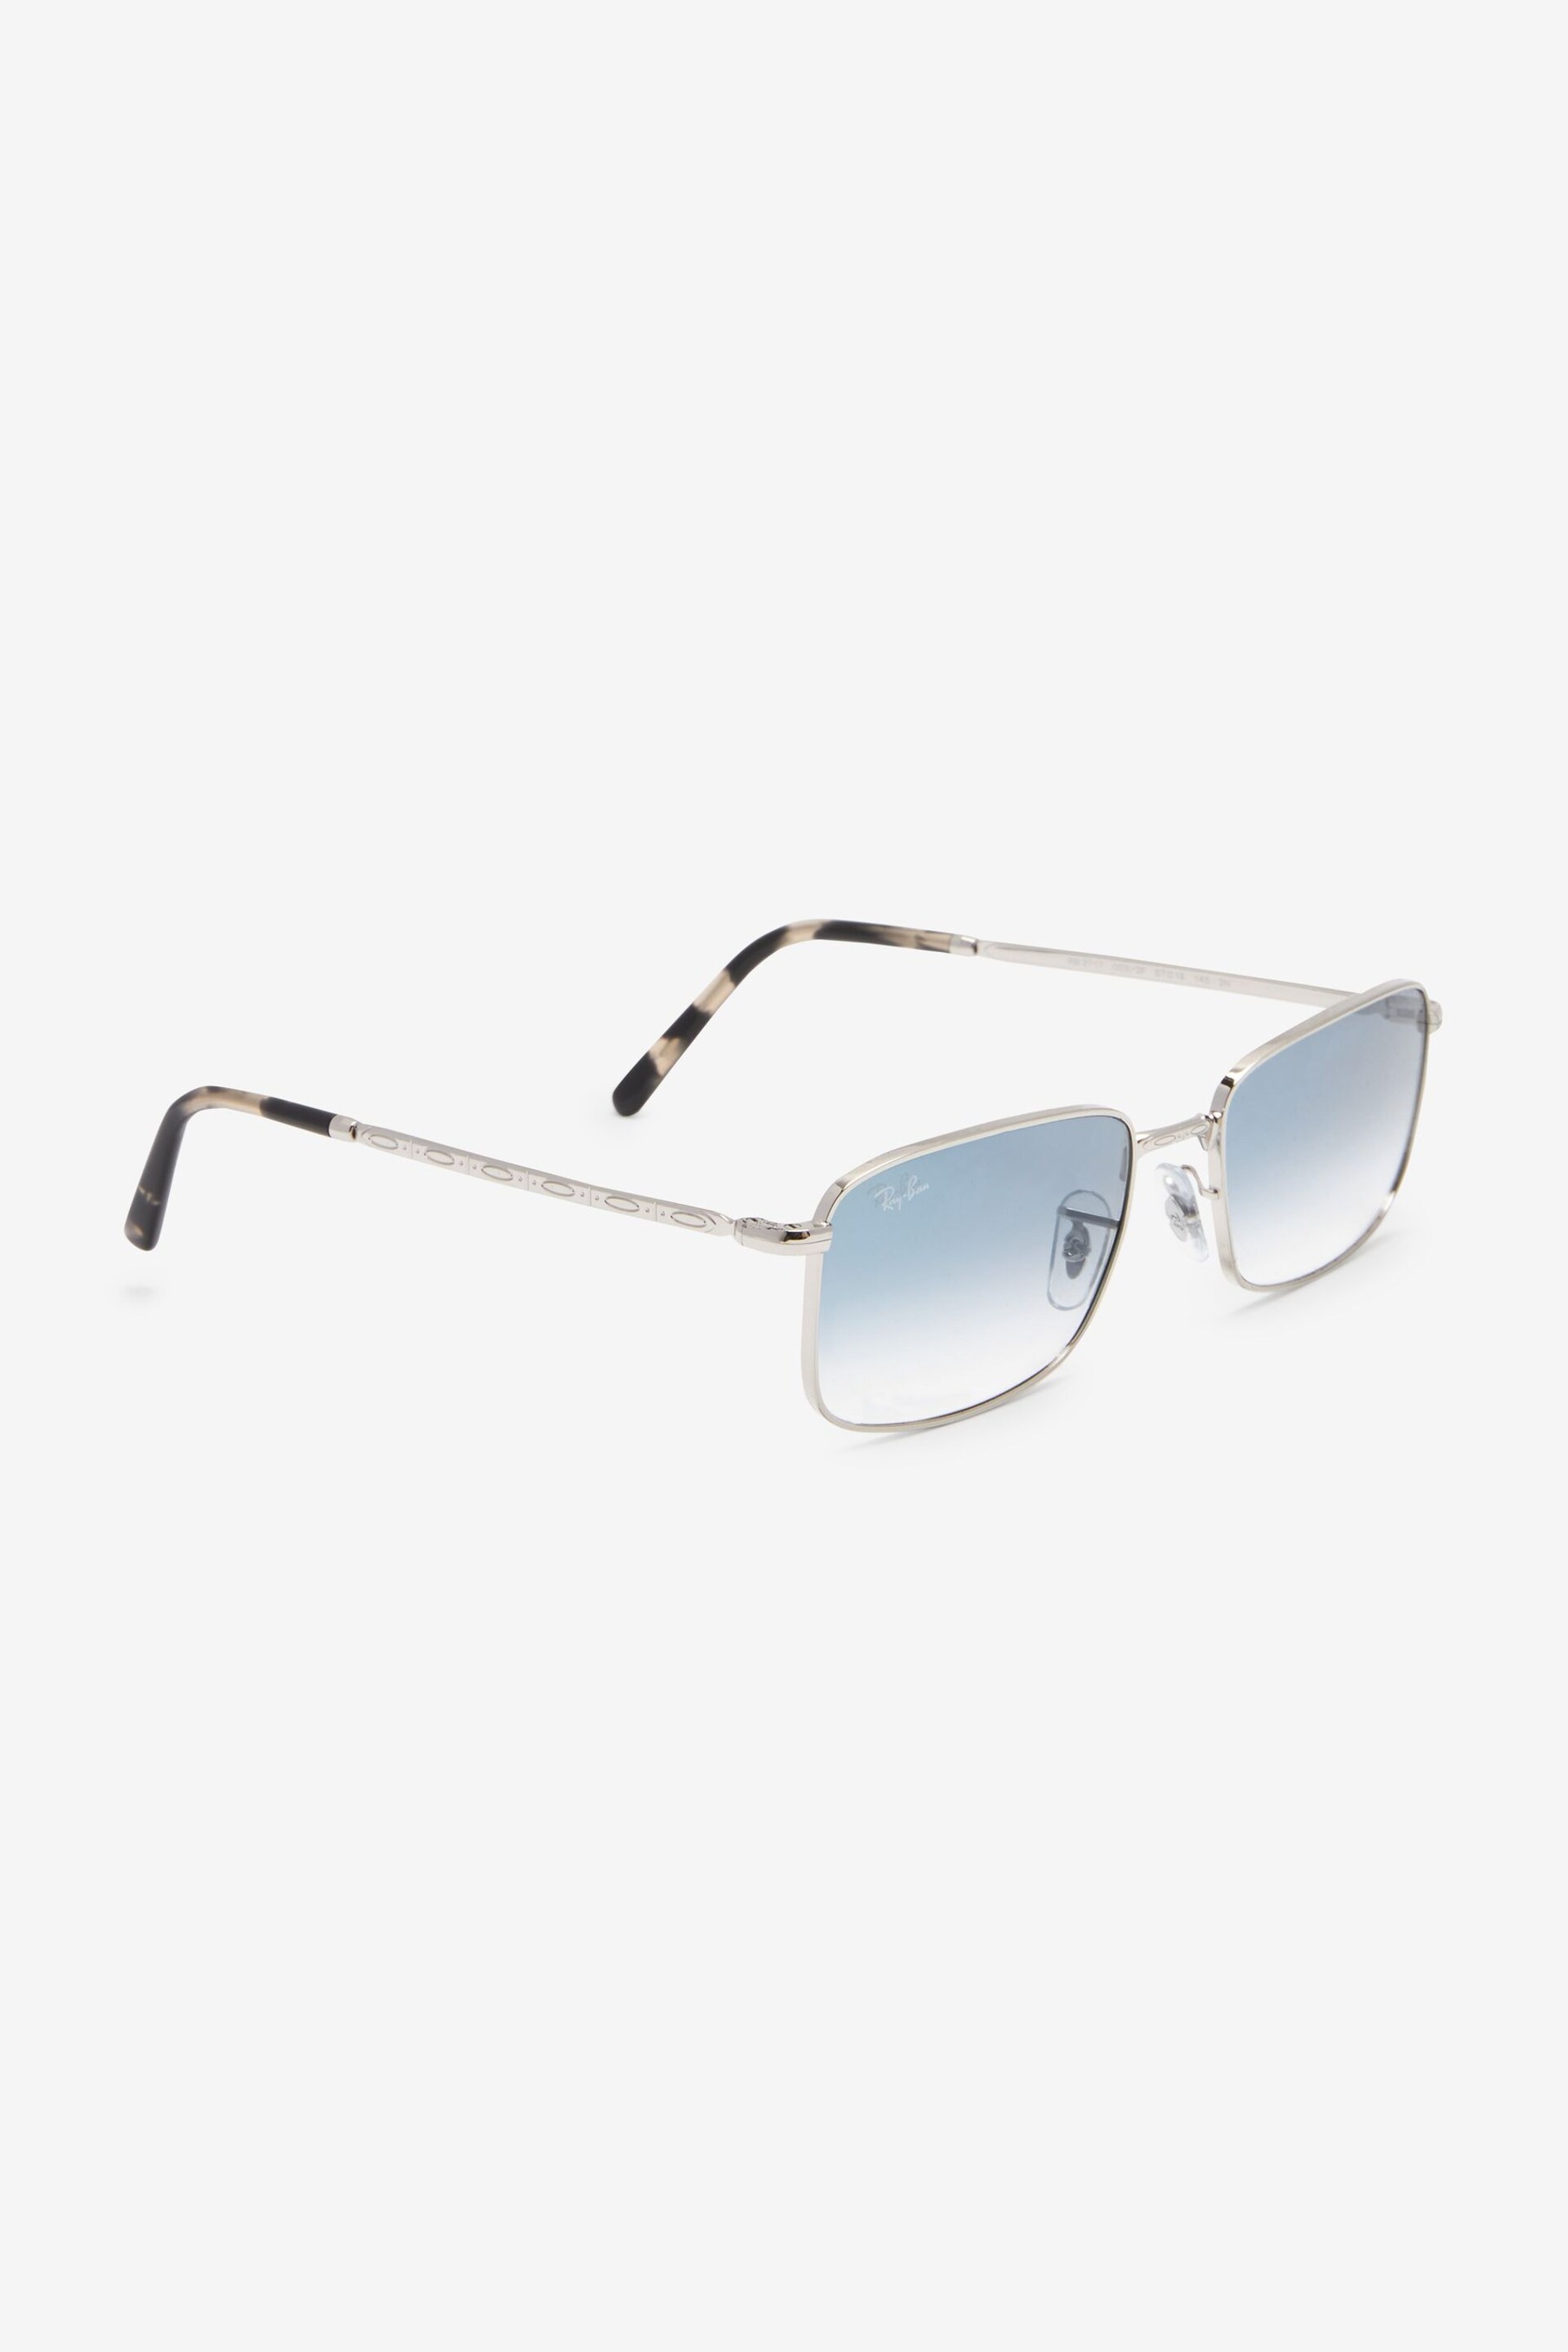 Ray-Ban Silver Sunglasses - Image 1 of 11